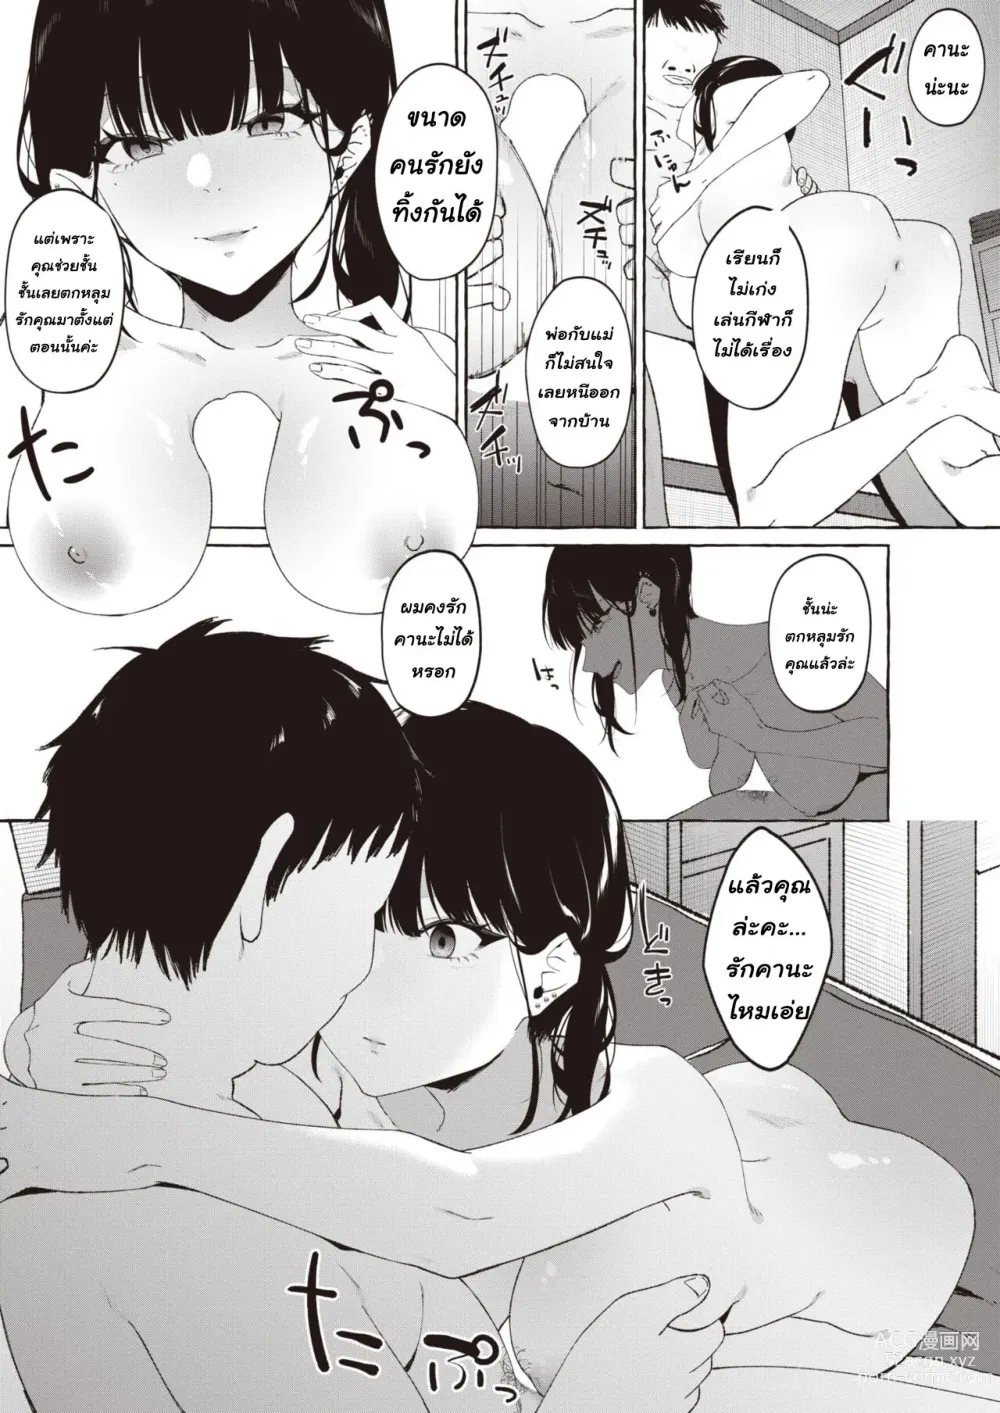 Page 25 of manga Yoru ni Kakeru